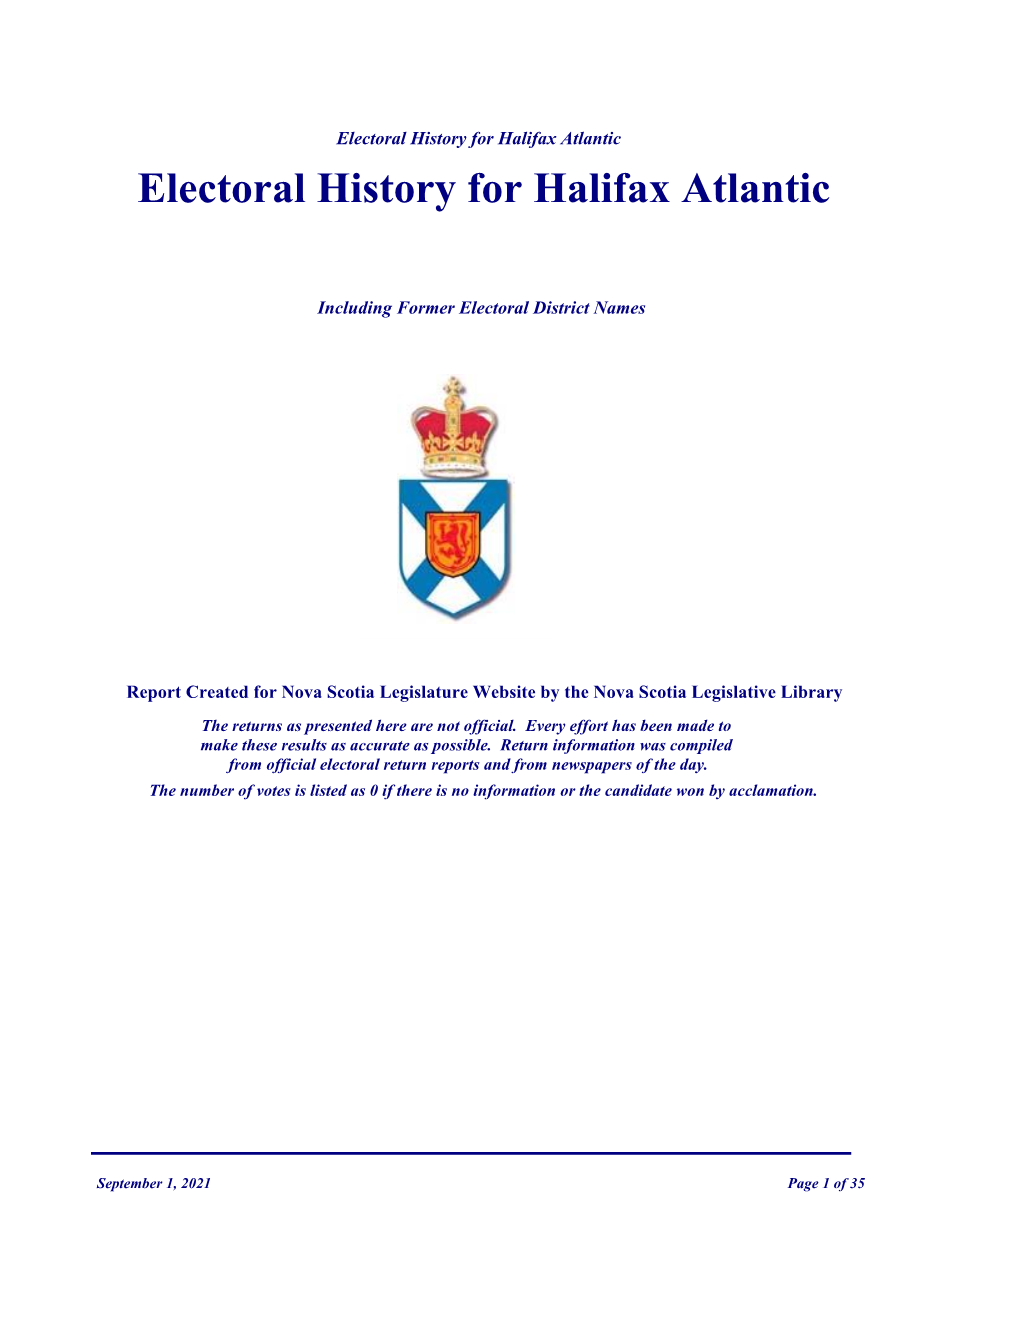 Halifax Atlantic Electoral History for Halifax Atlantic